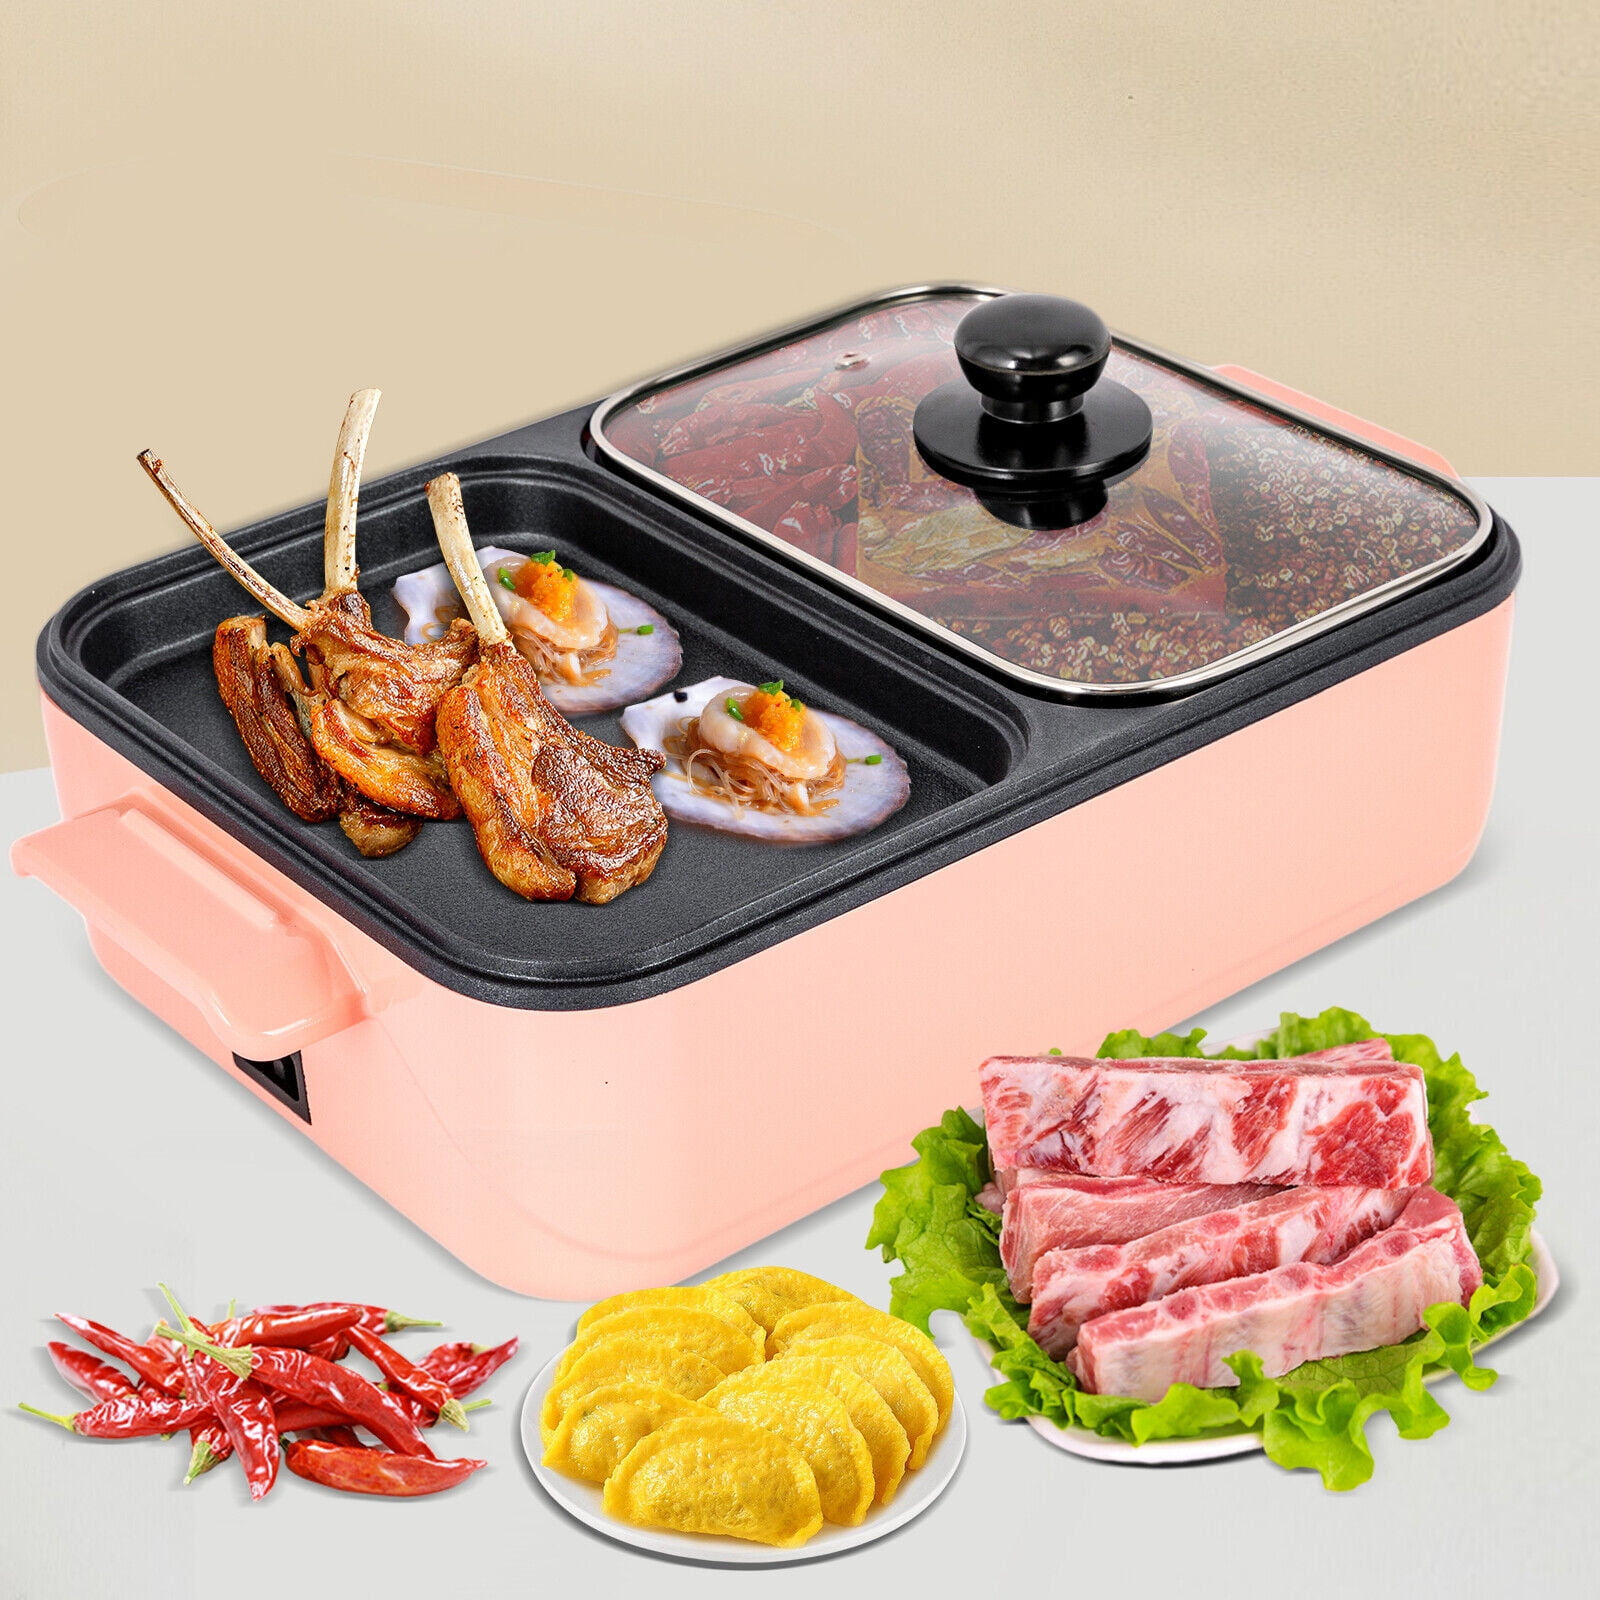 Korean BBQ Grill Electric Griddle Grill Teppanyaki BBQ Hot Plate Camping,  Non Stick, Adjustable Temperature Pan Multi - Purpose Pot [Energy Class